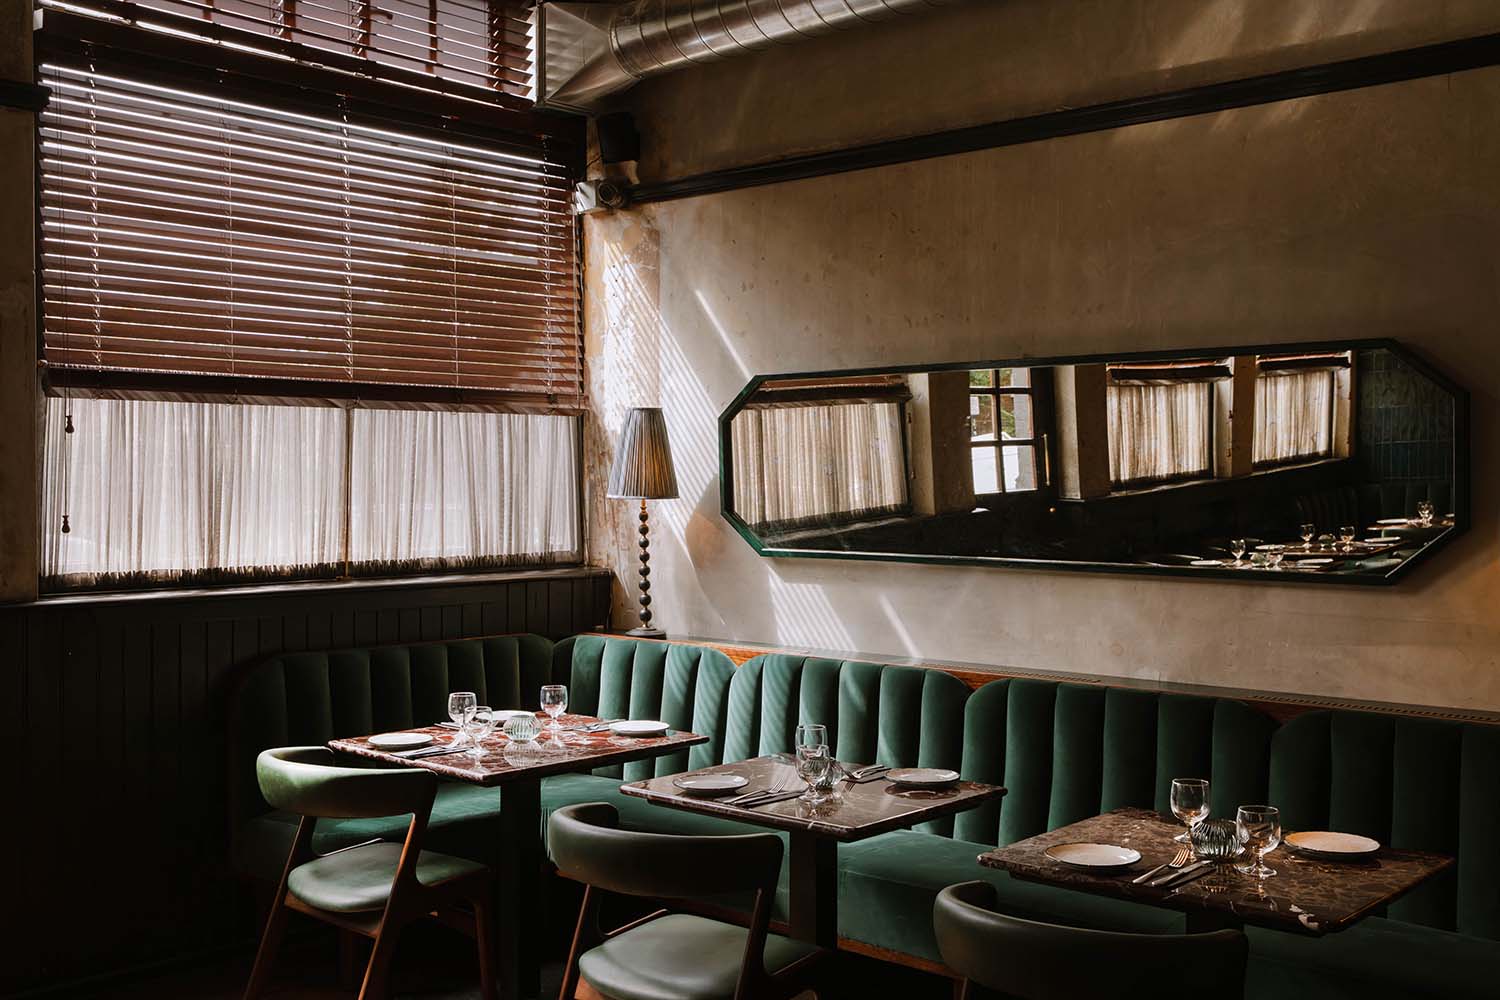 Kudu Grill Peckham London Open Fire Restaurant Designed by A-nrd studio